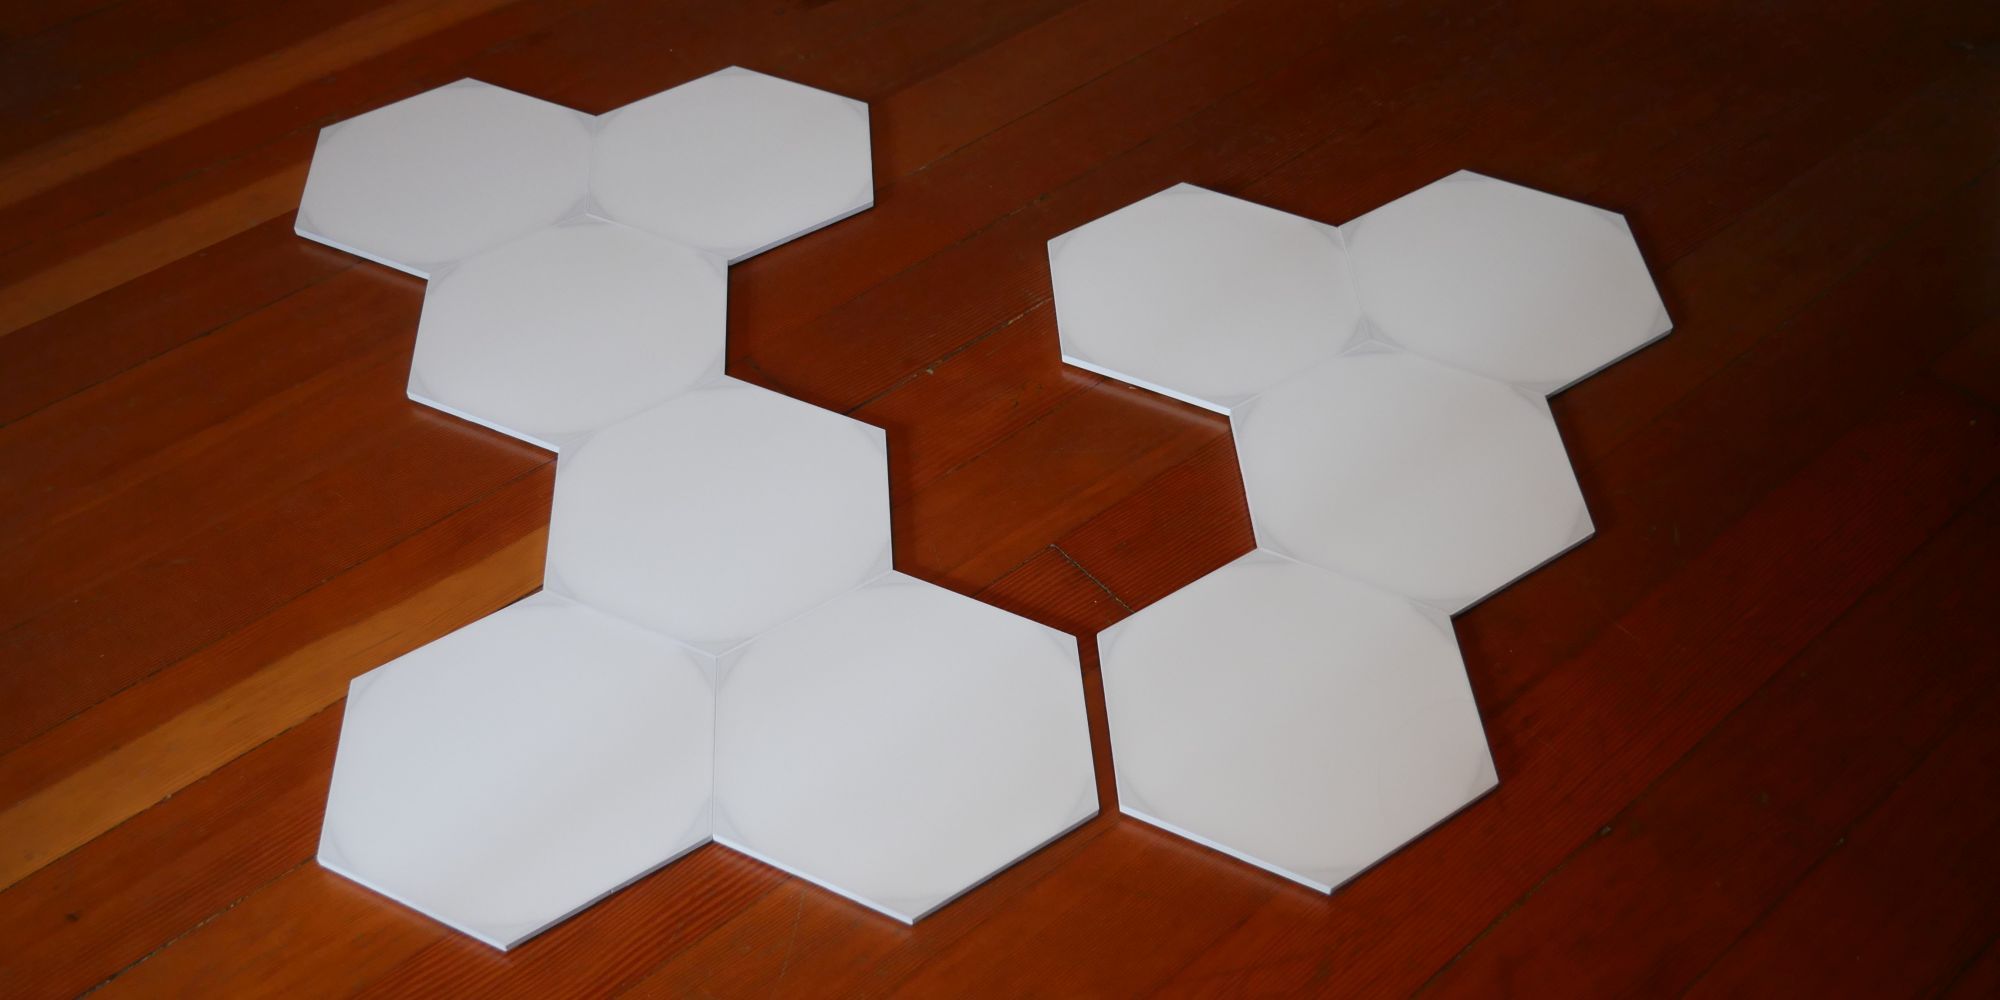 Nanoleaf Shapes Hexagons laid out on floor